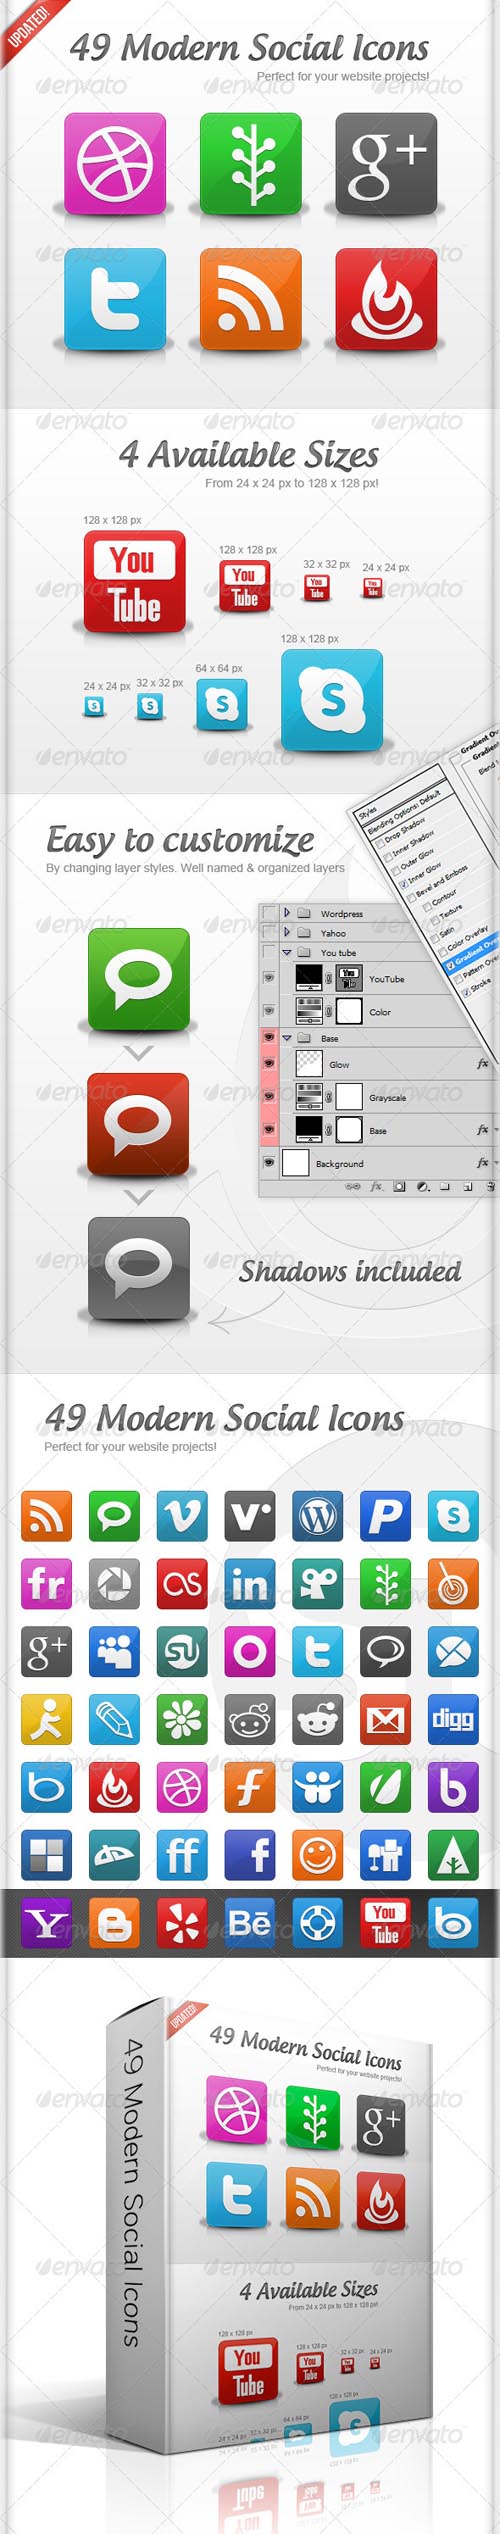 GraphicRiver - 49 Modern Social Icons 150286